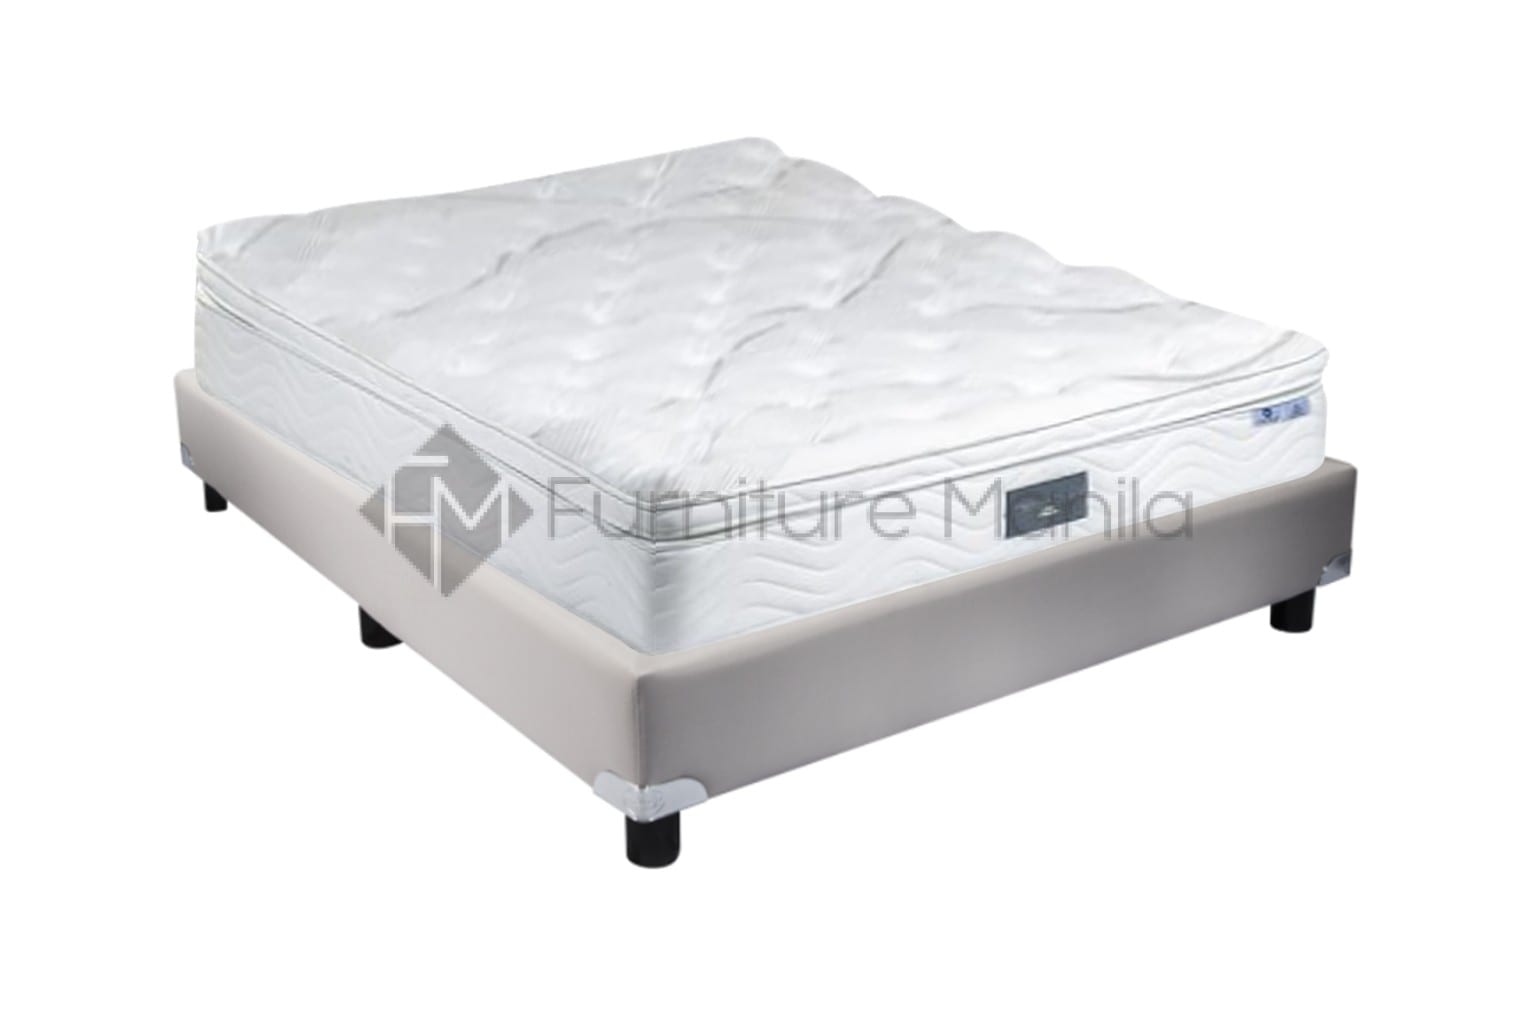 uratex polycotton mattress review